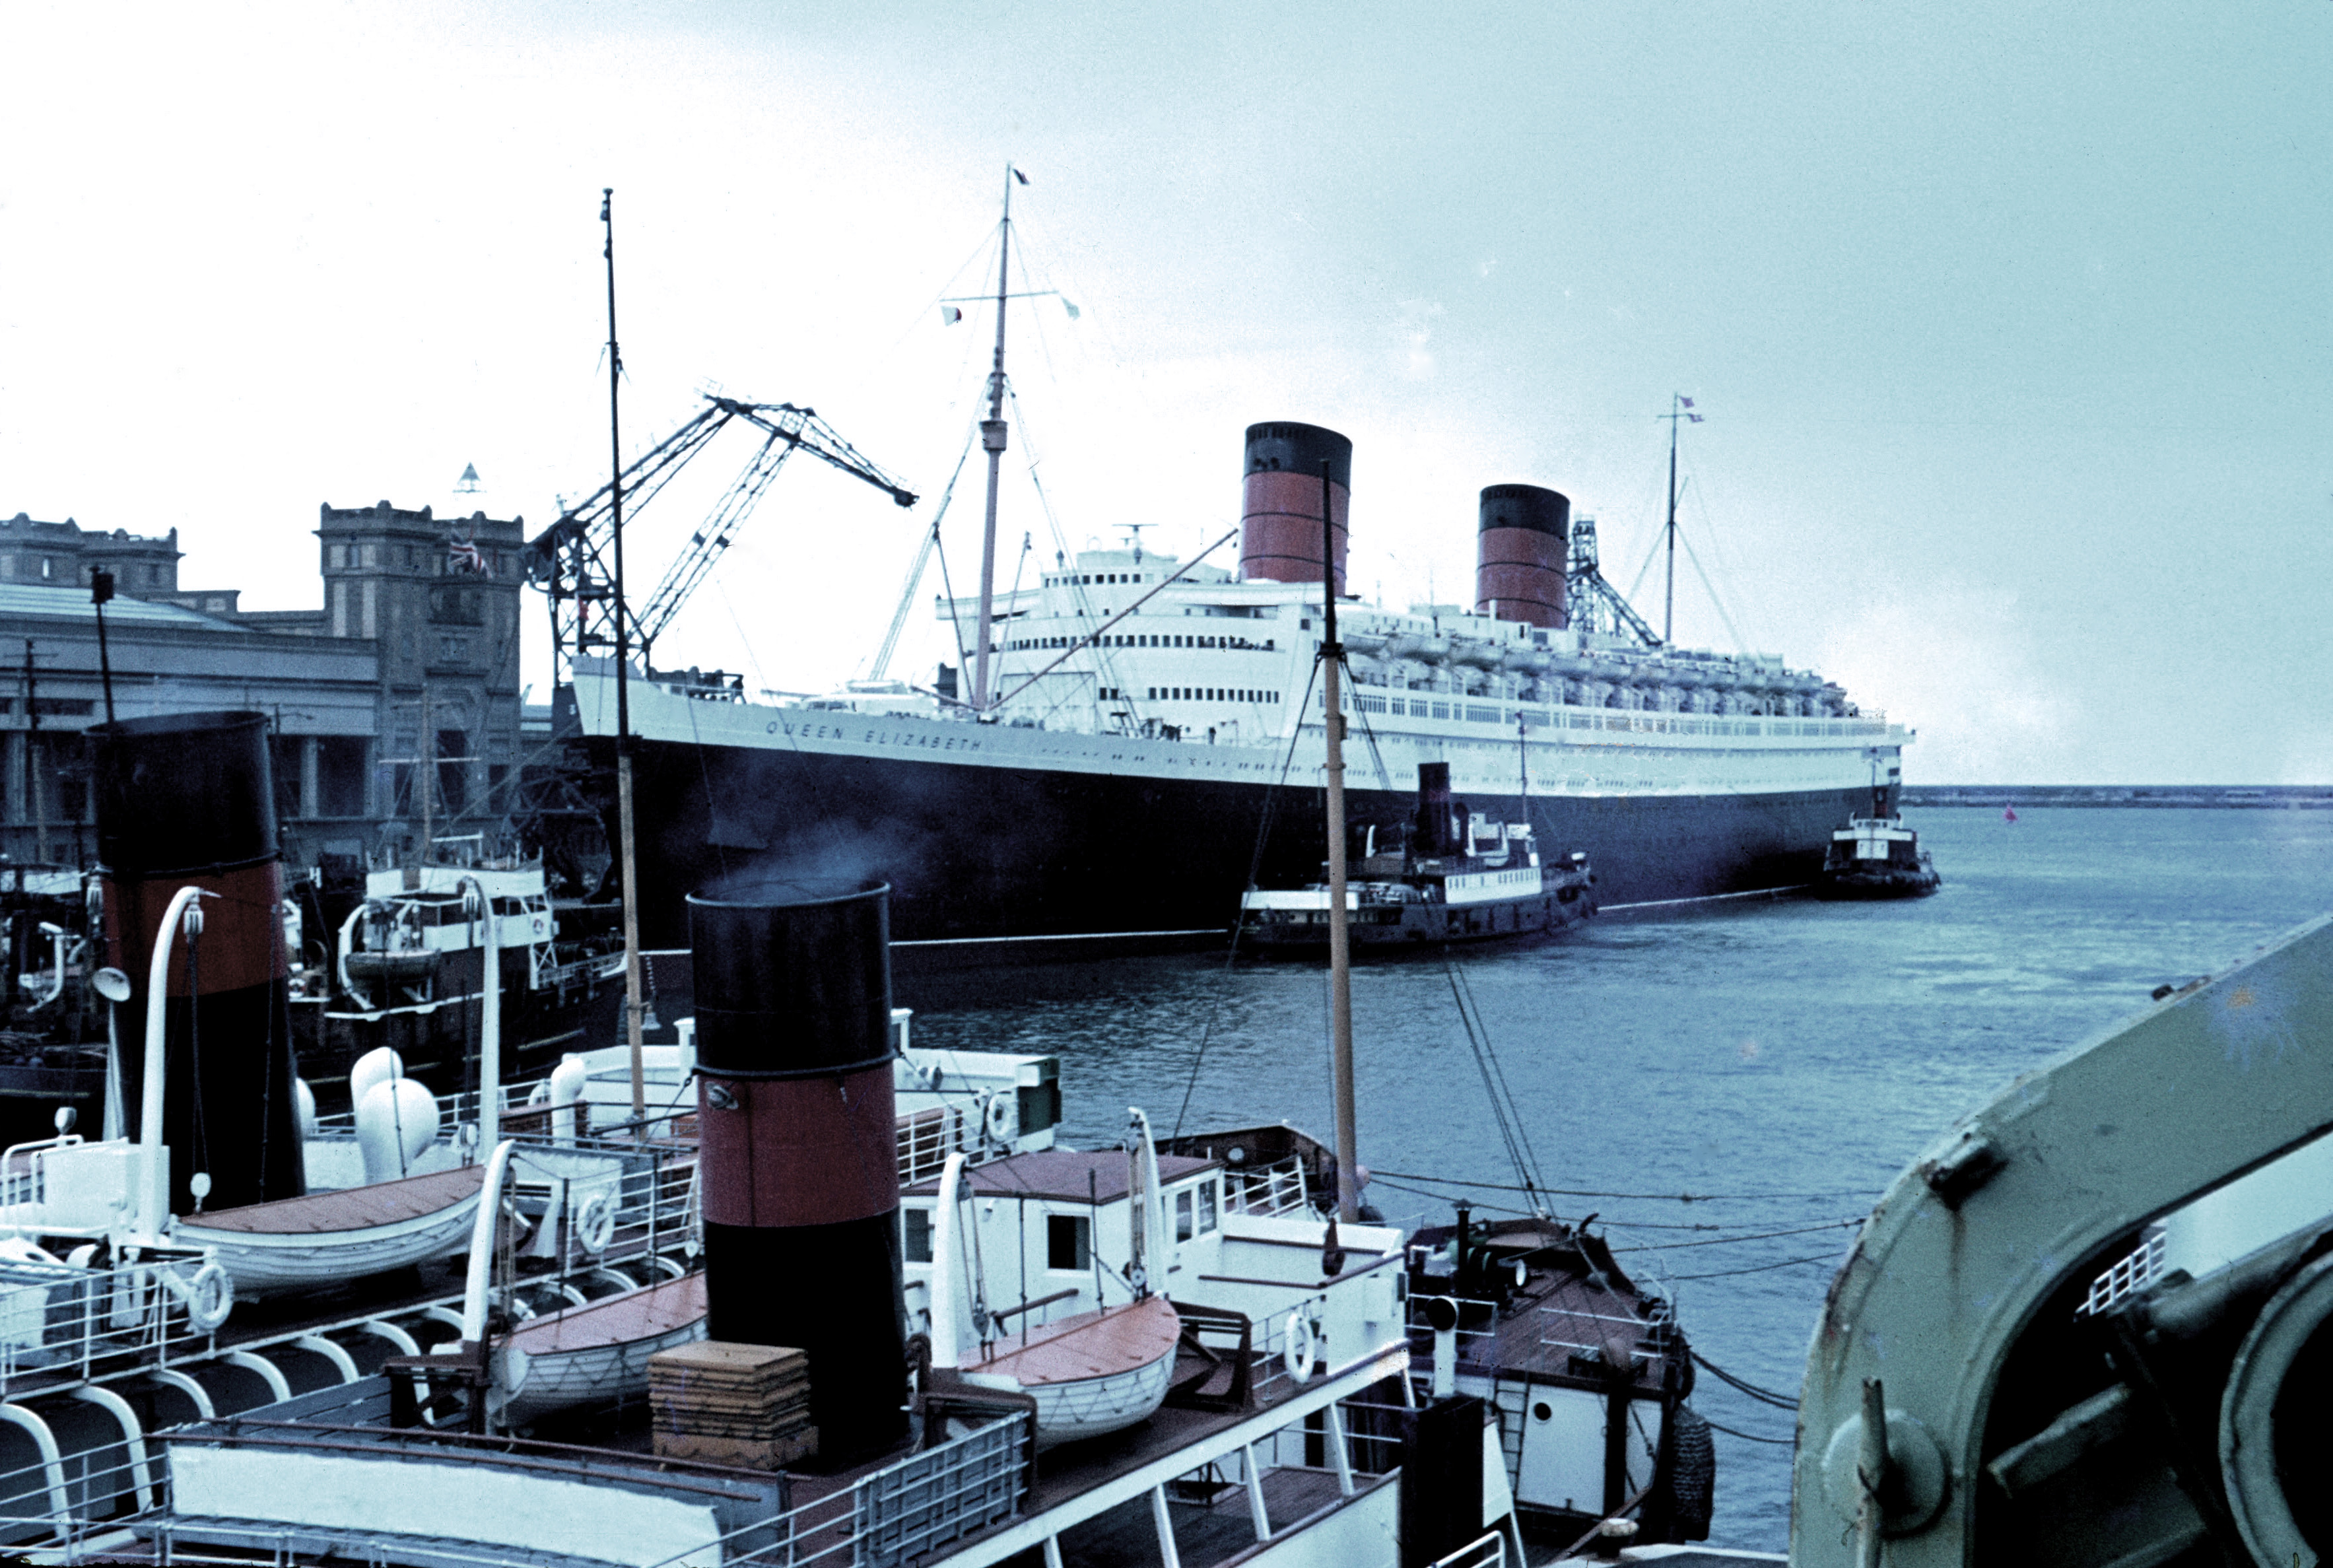 Queen Elizabeth at Cherbourg, France in 1966.